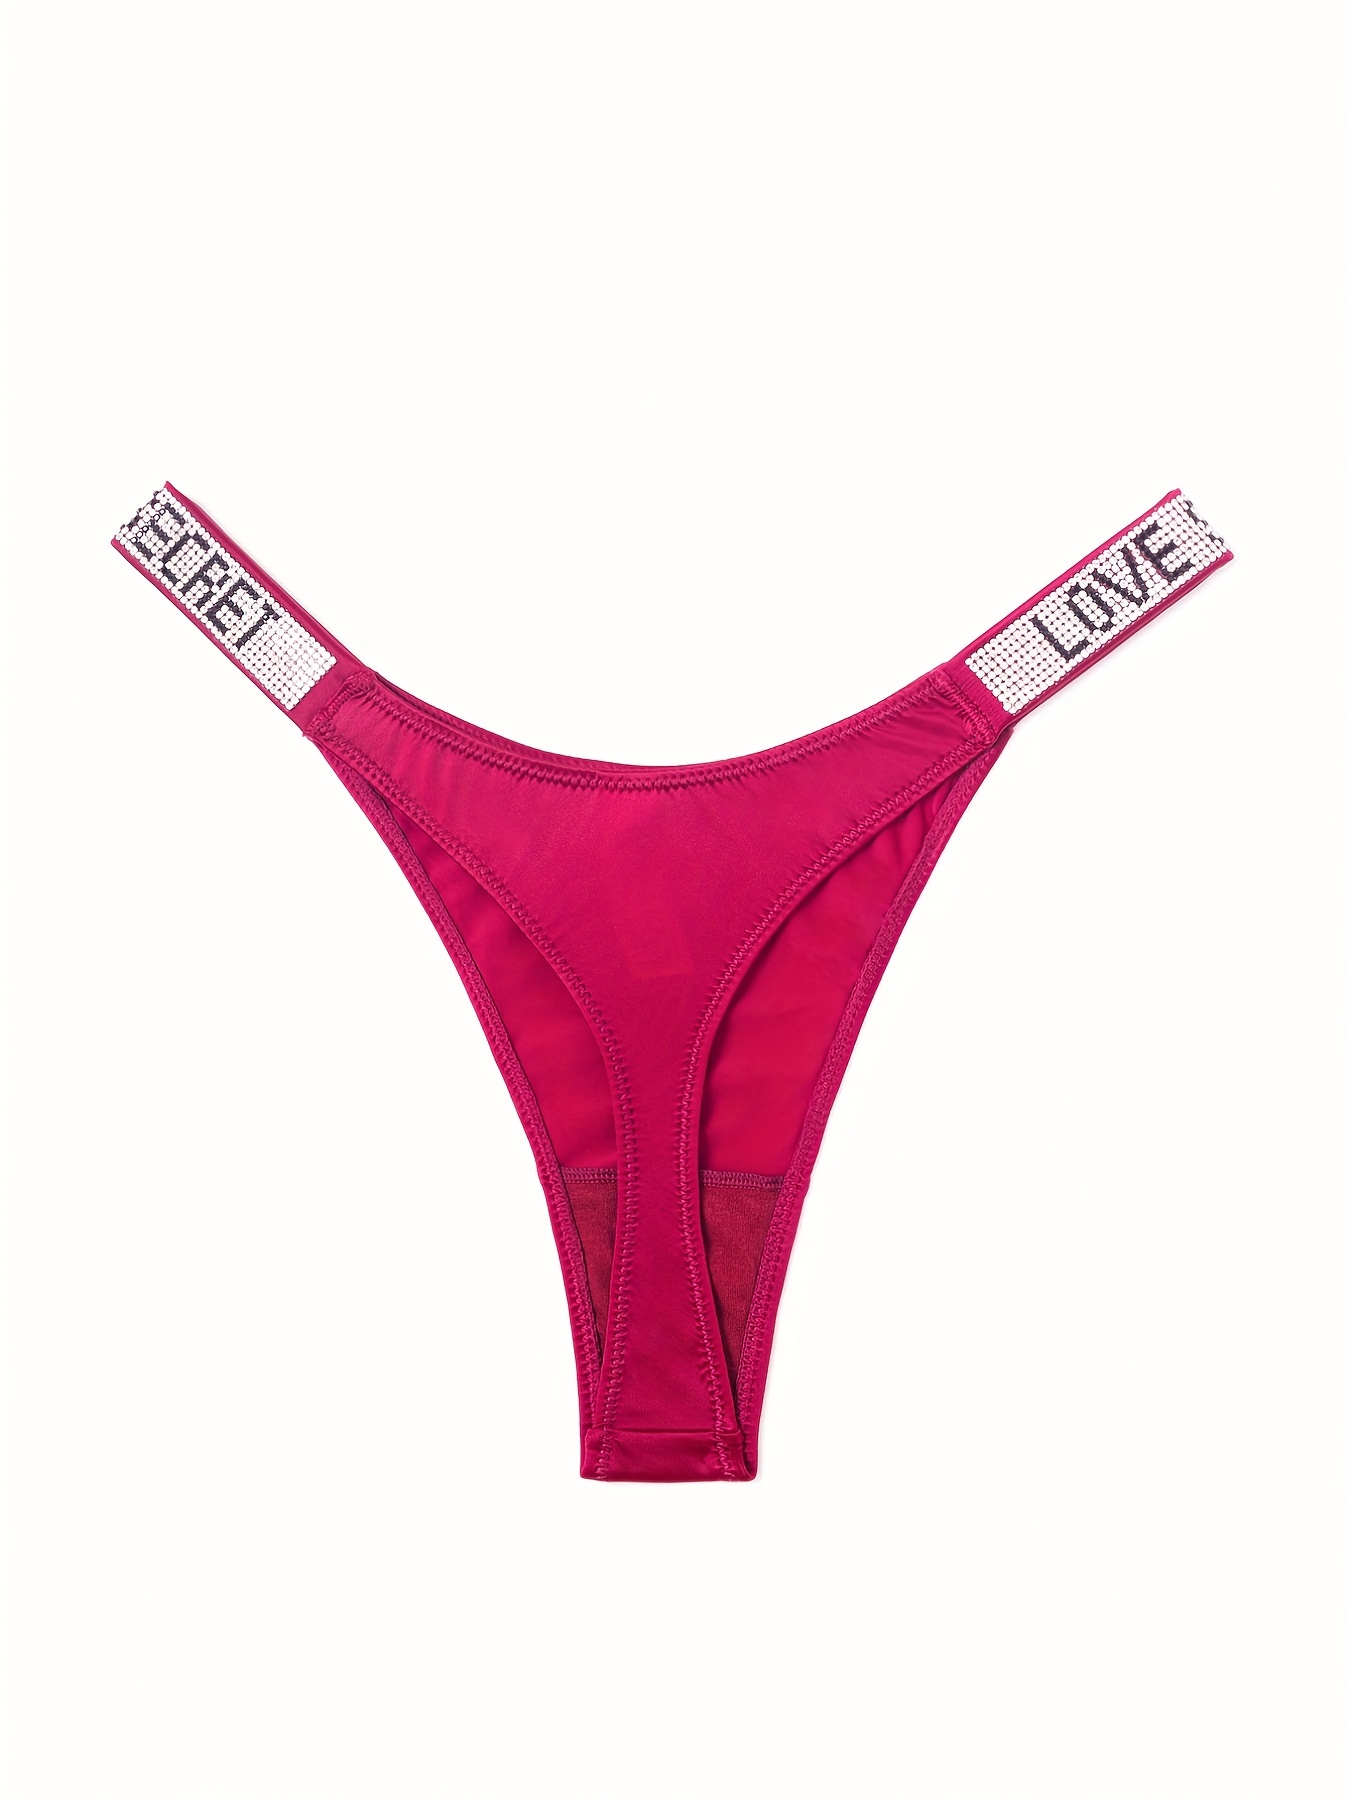 victoria Victoria's Secret hot pink rhinestone strap Brazilian underwear